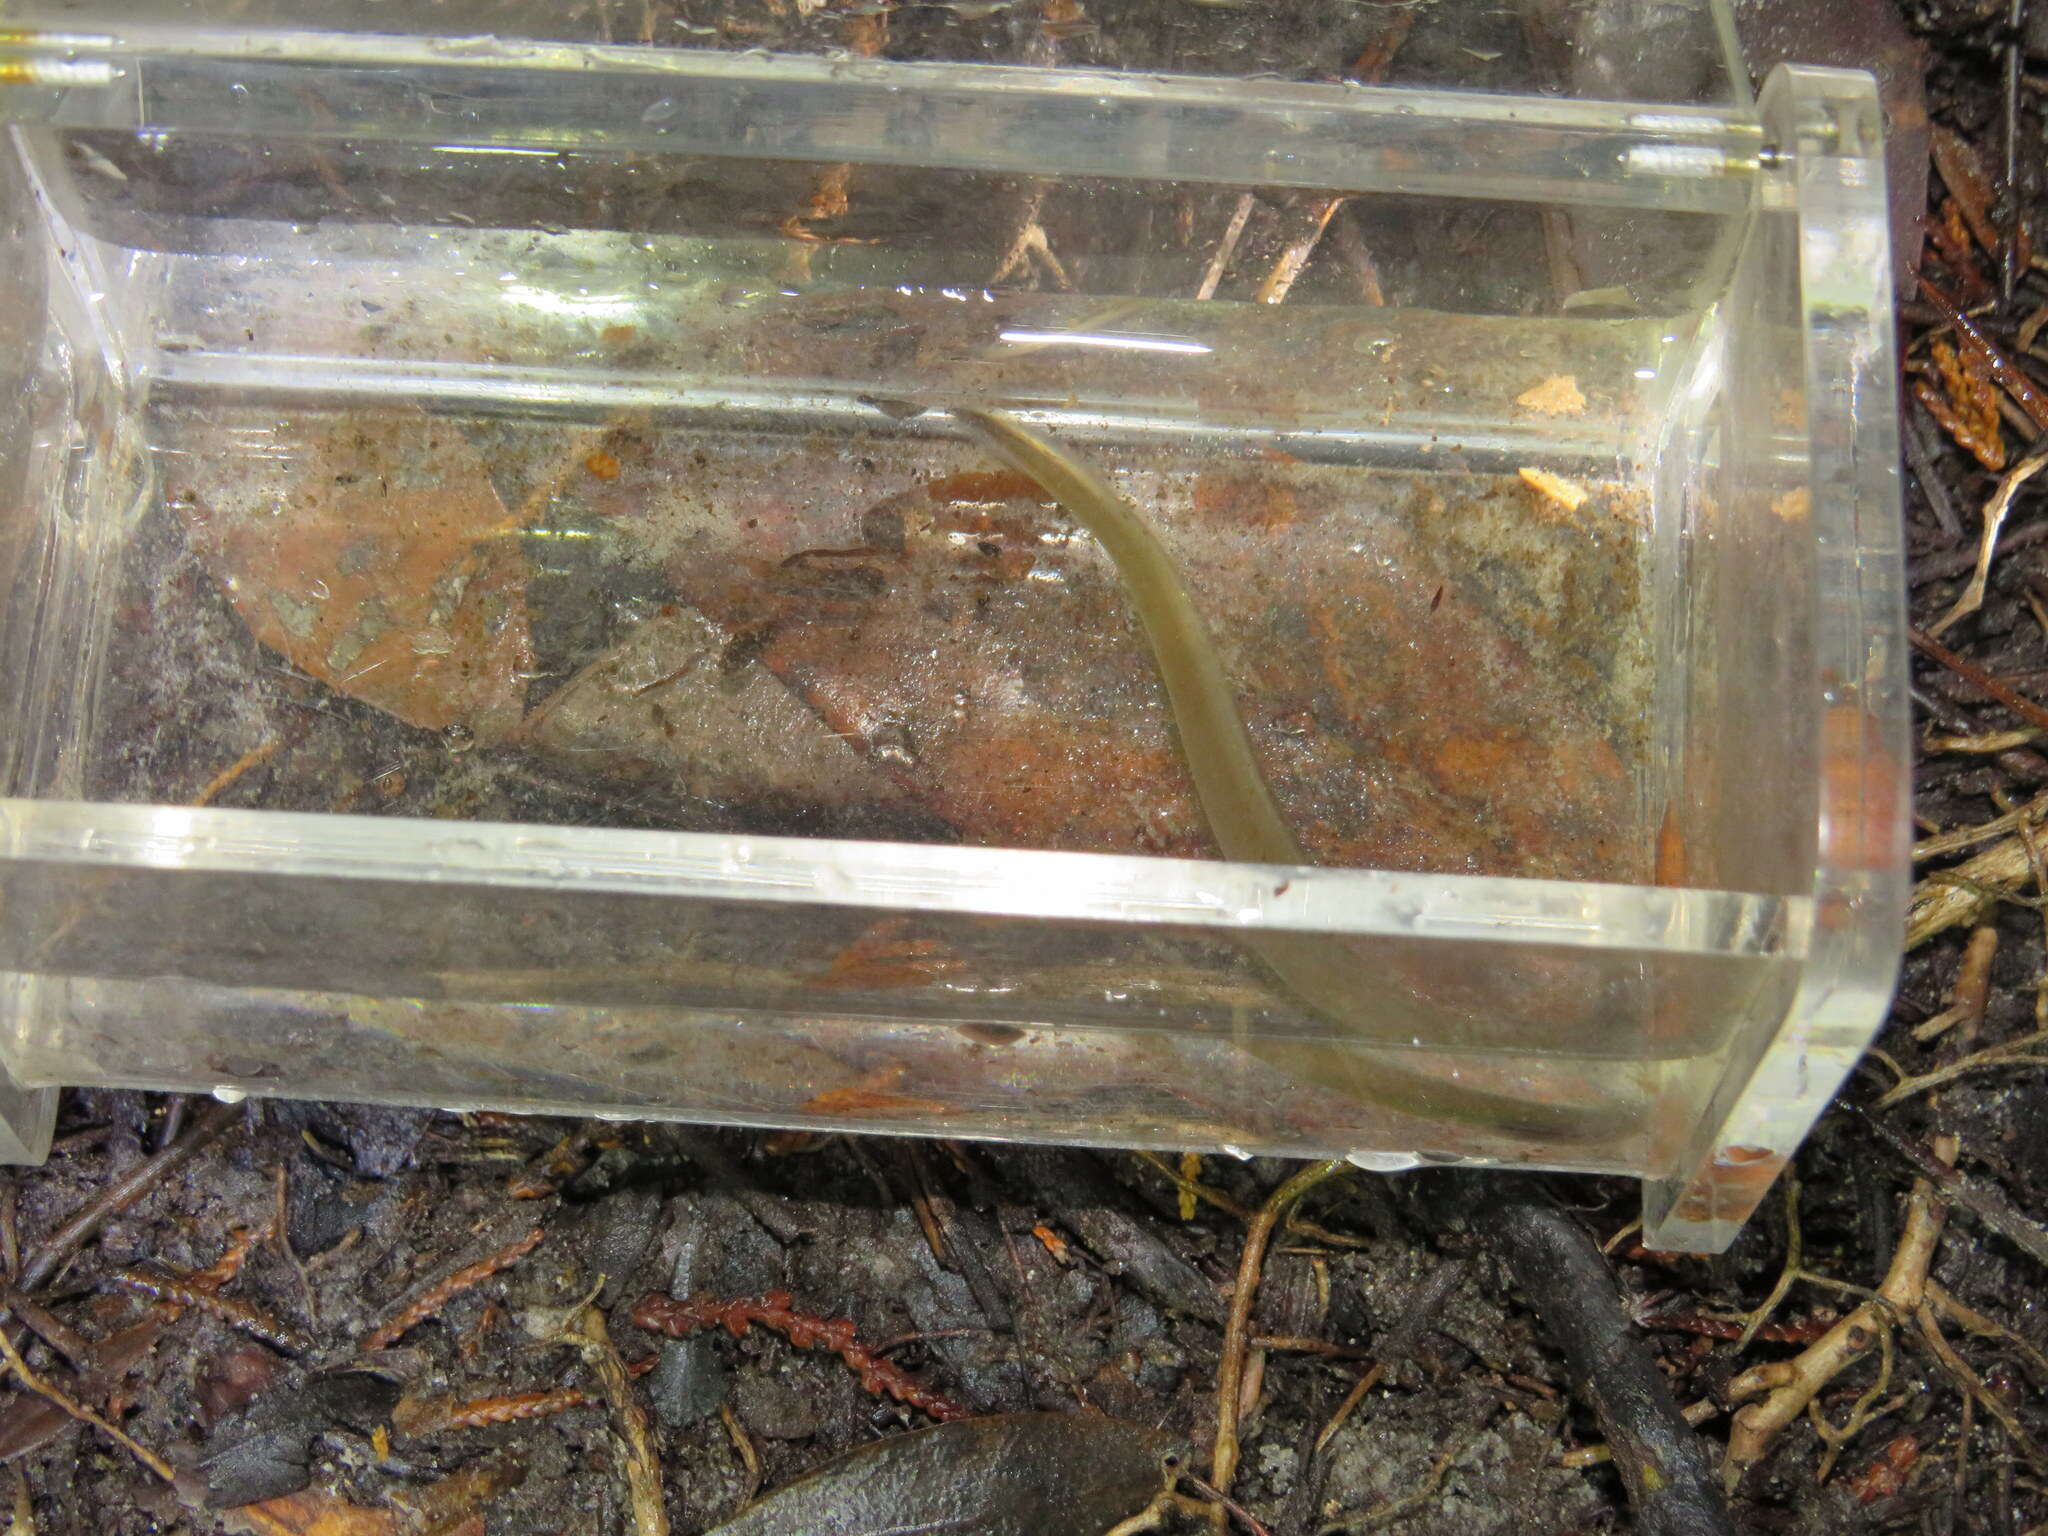 Image of Southern brook lamprey